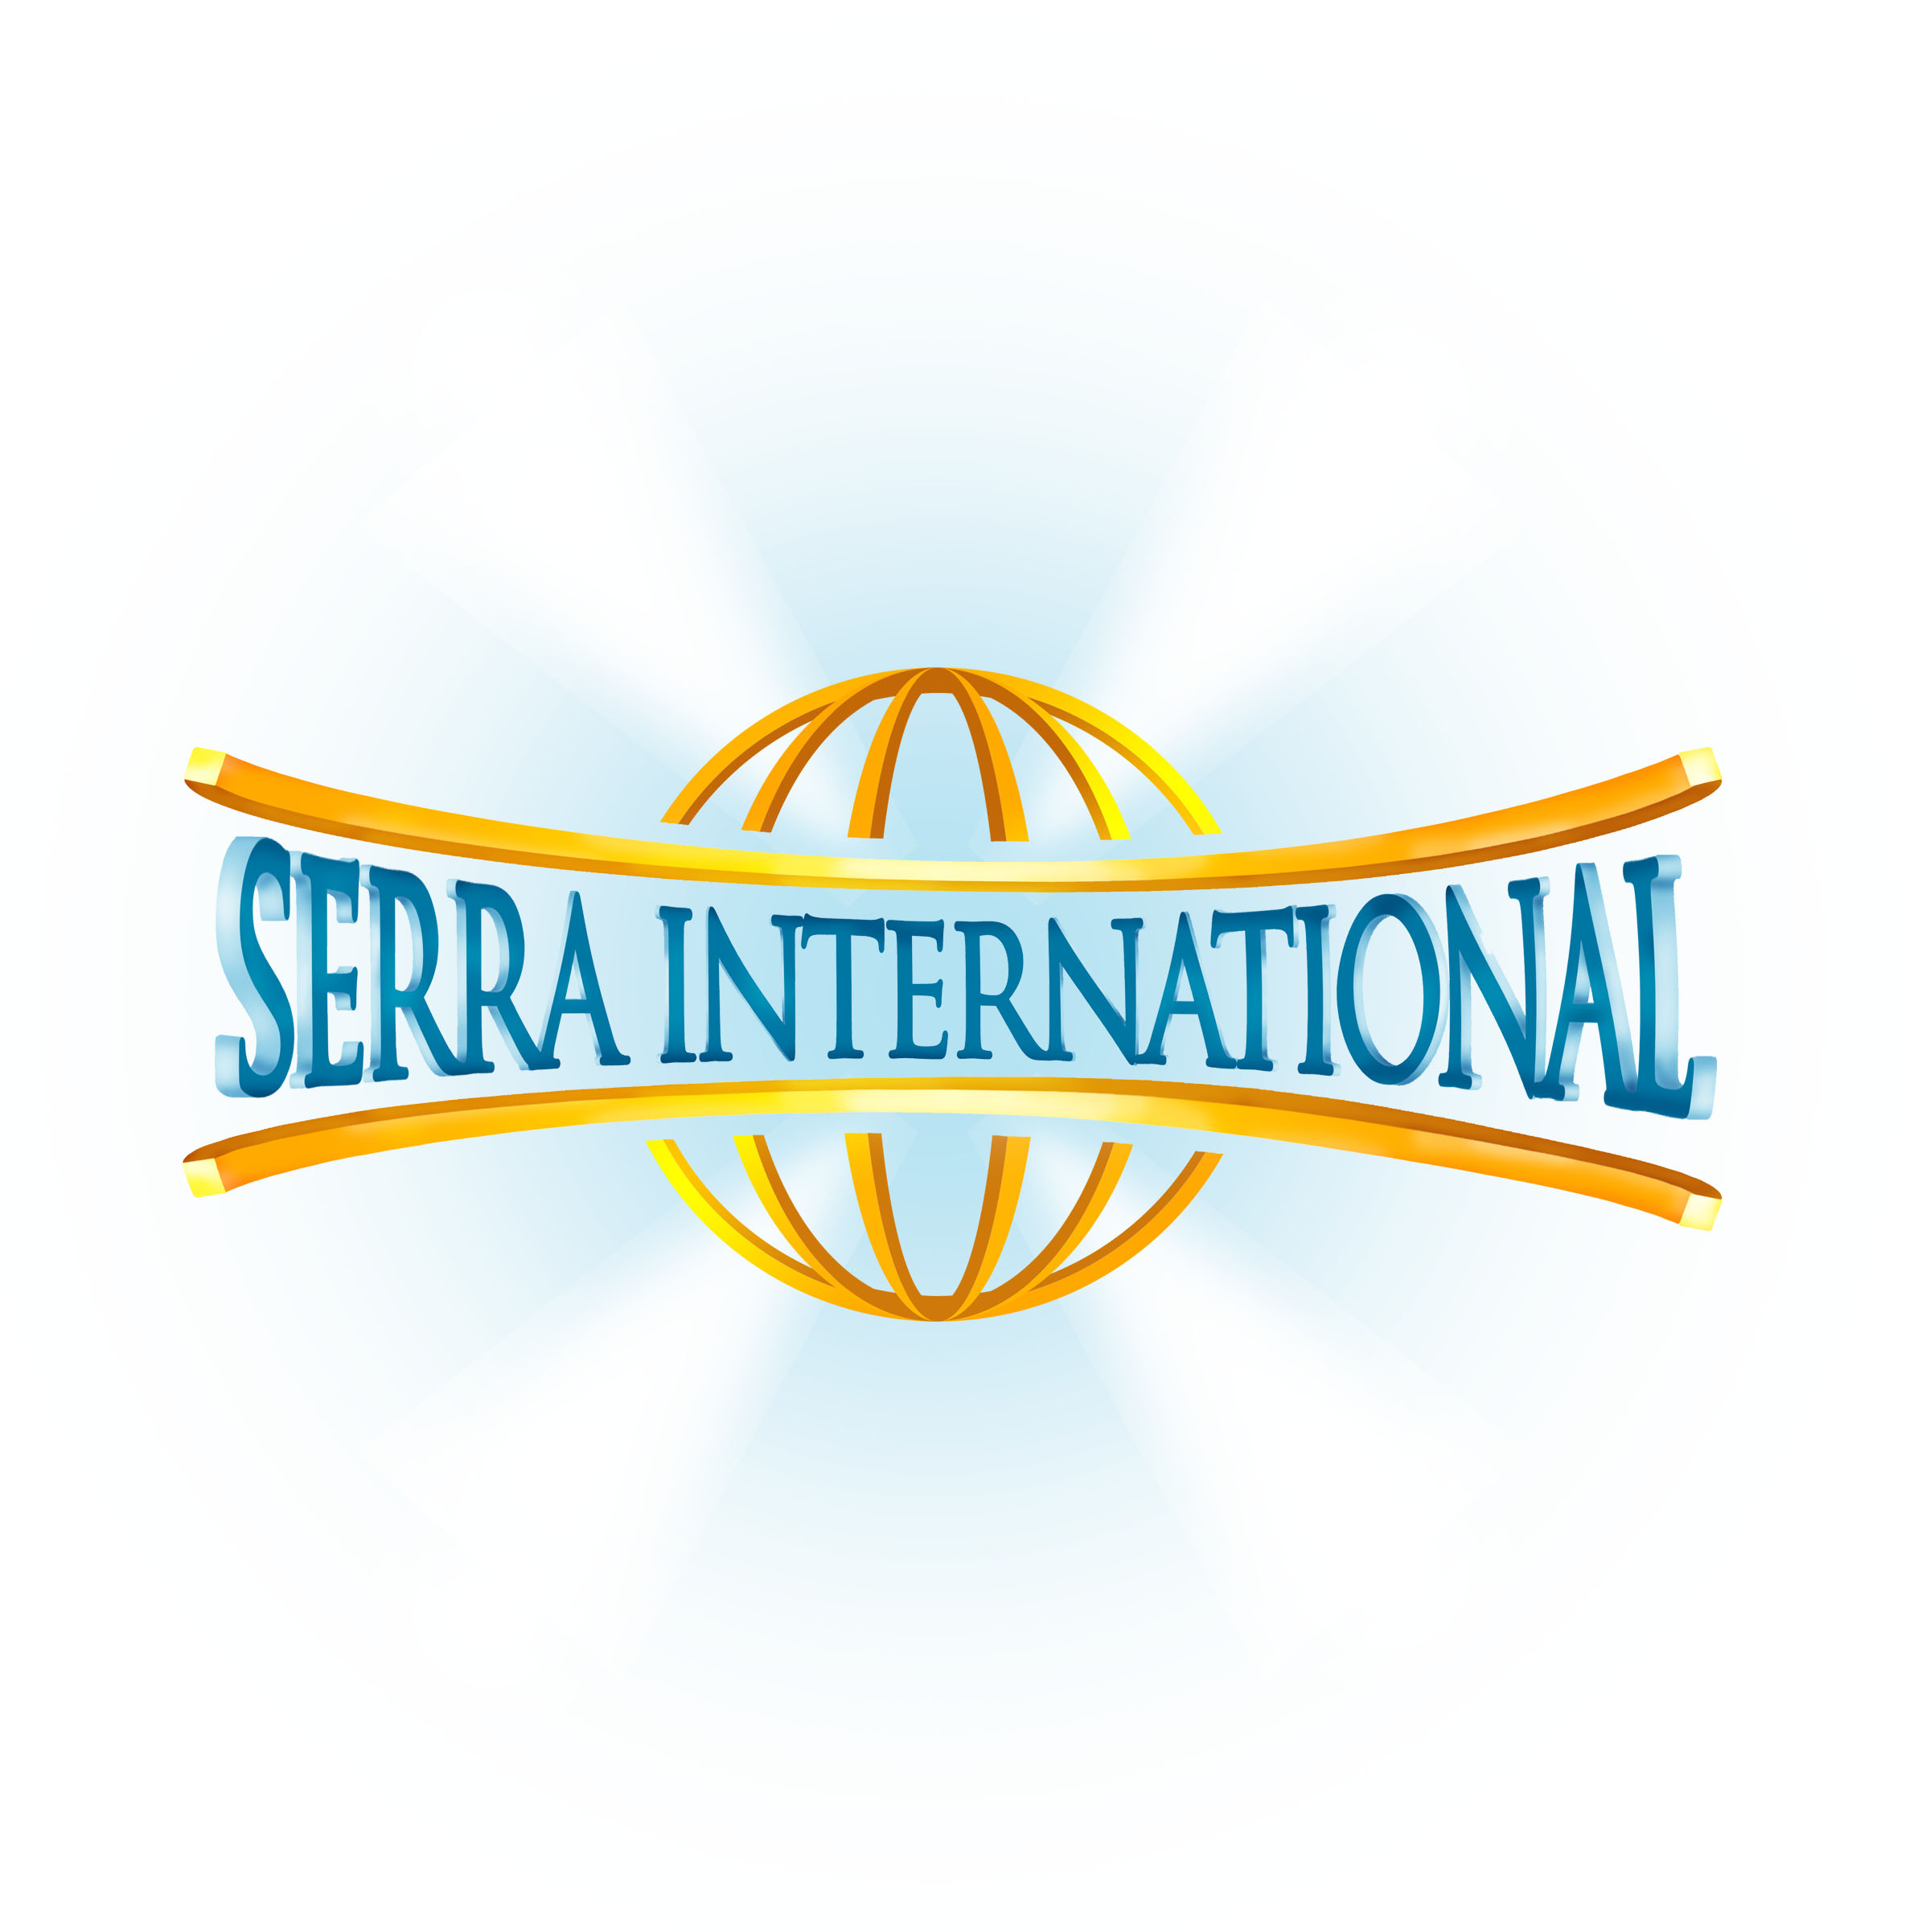 Serra International2